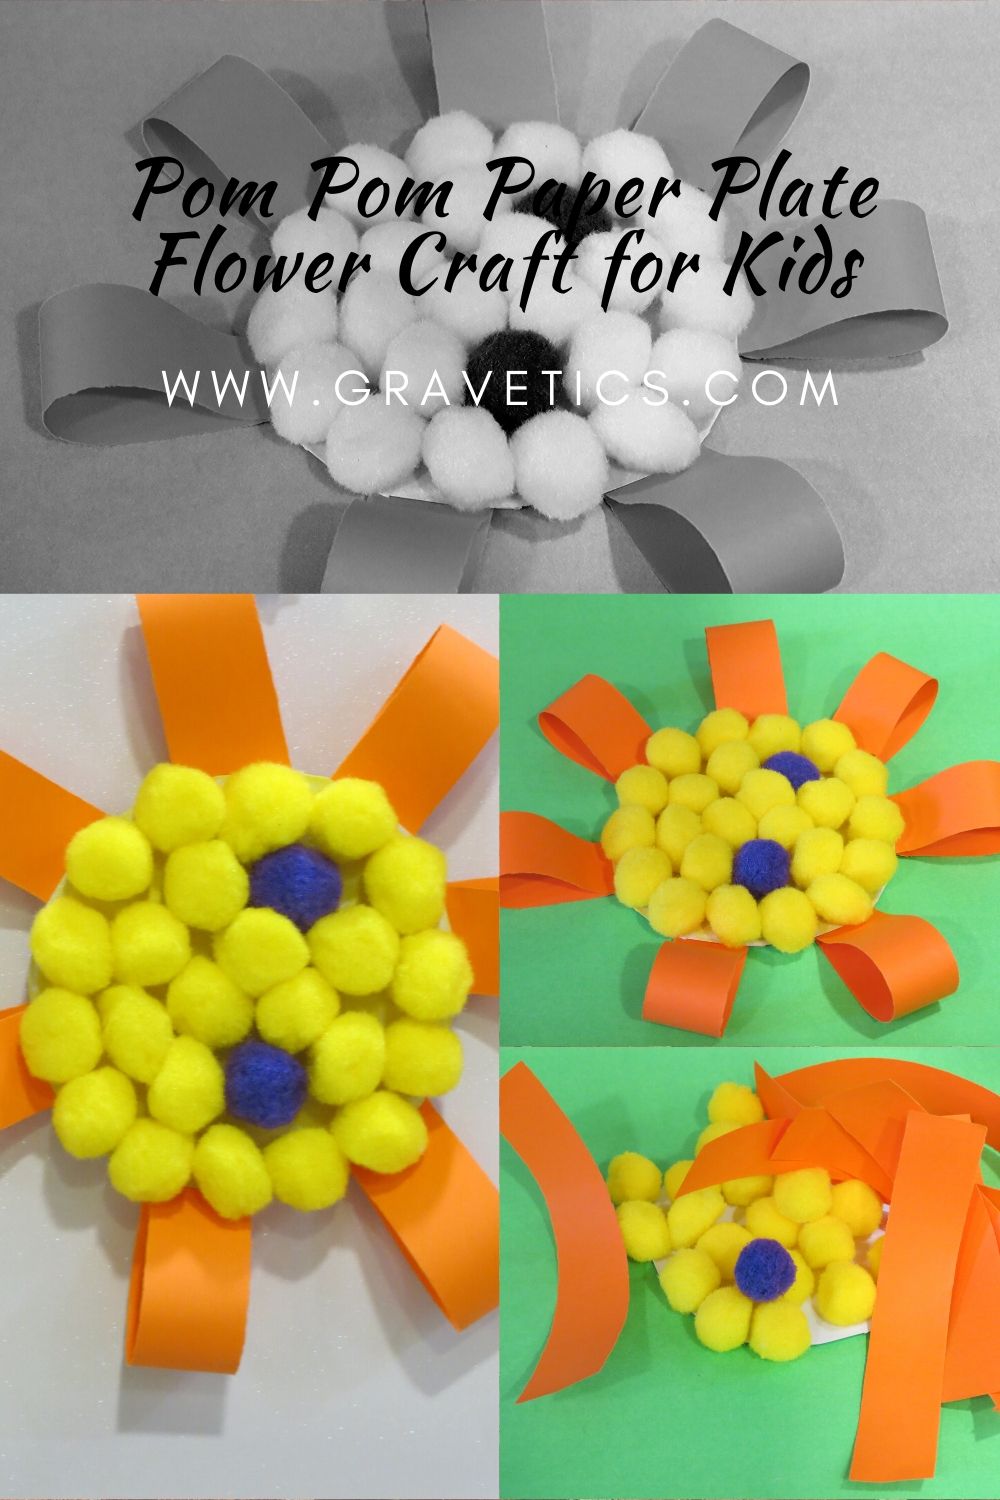 Pom Pom Paper Plate Flower Craft for Kids